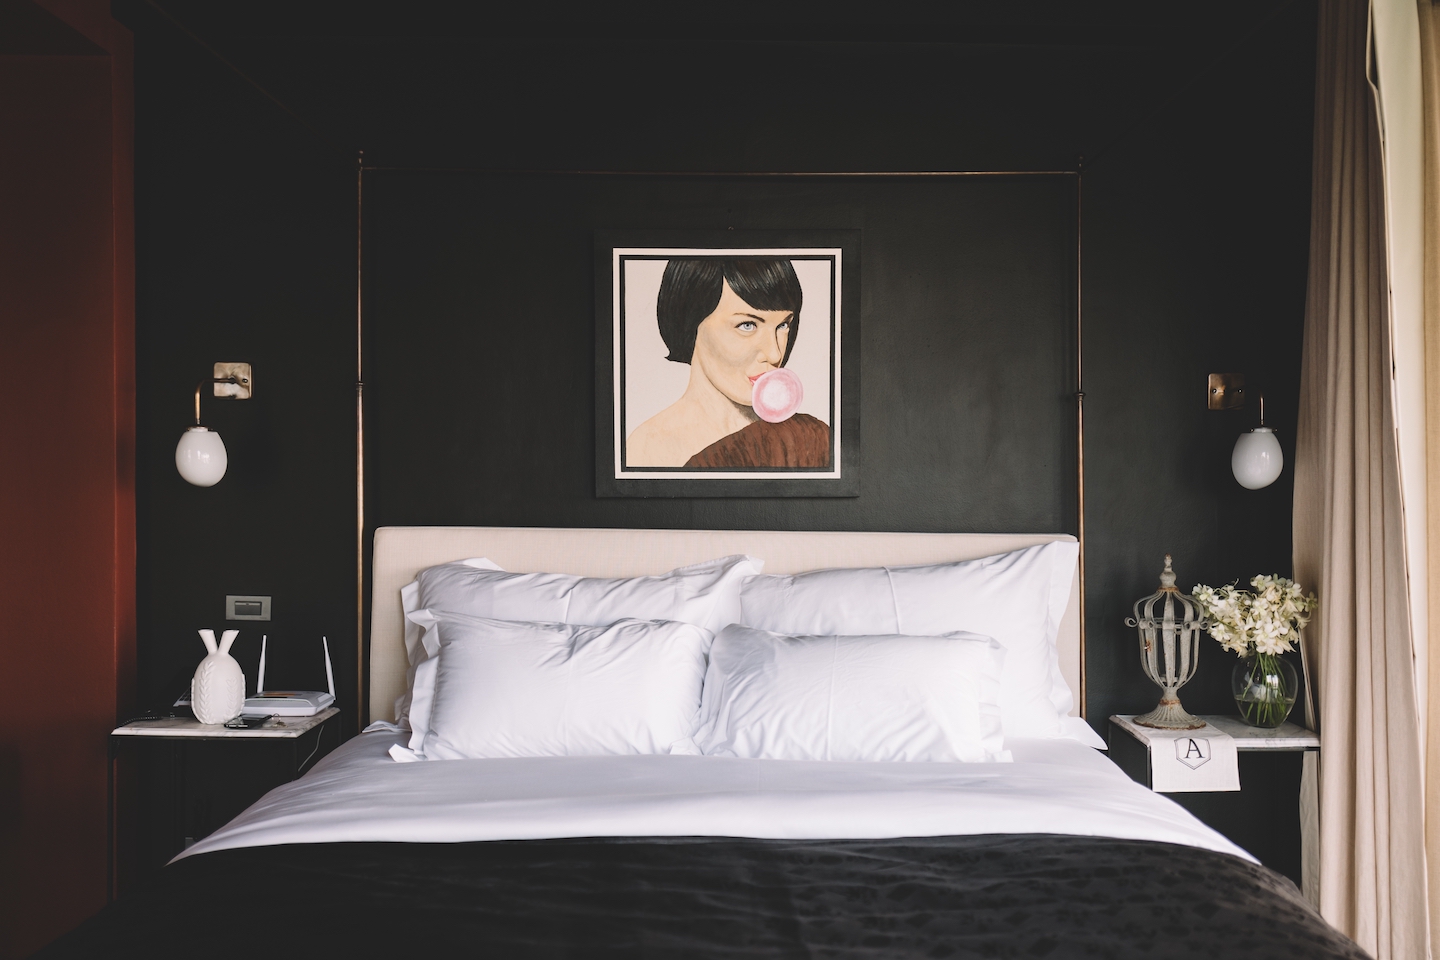 design-hotel-bedroom-2021-04-06-00-00-47-utc